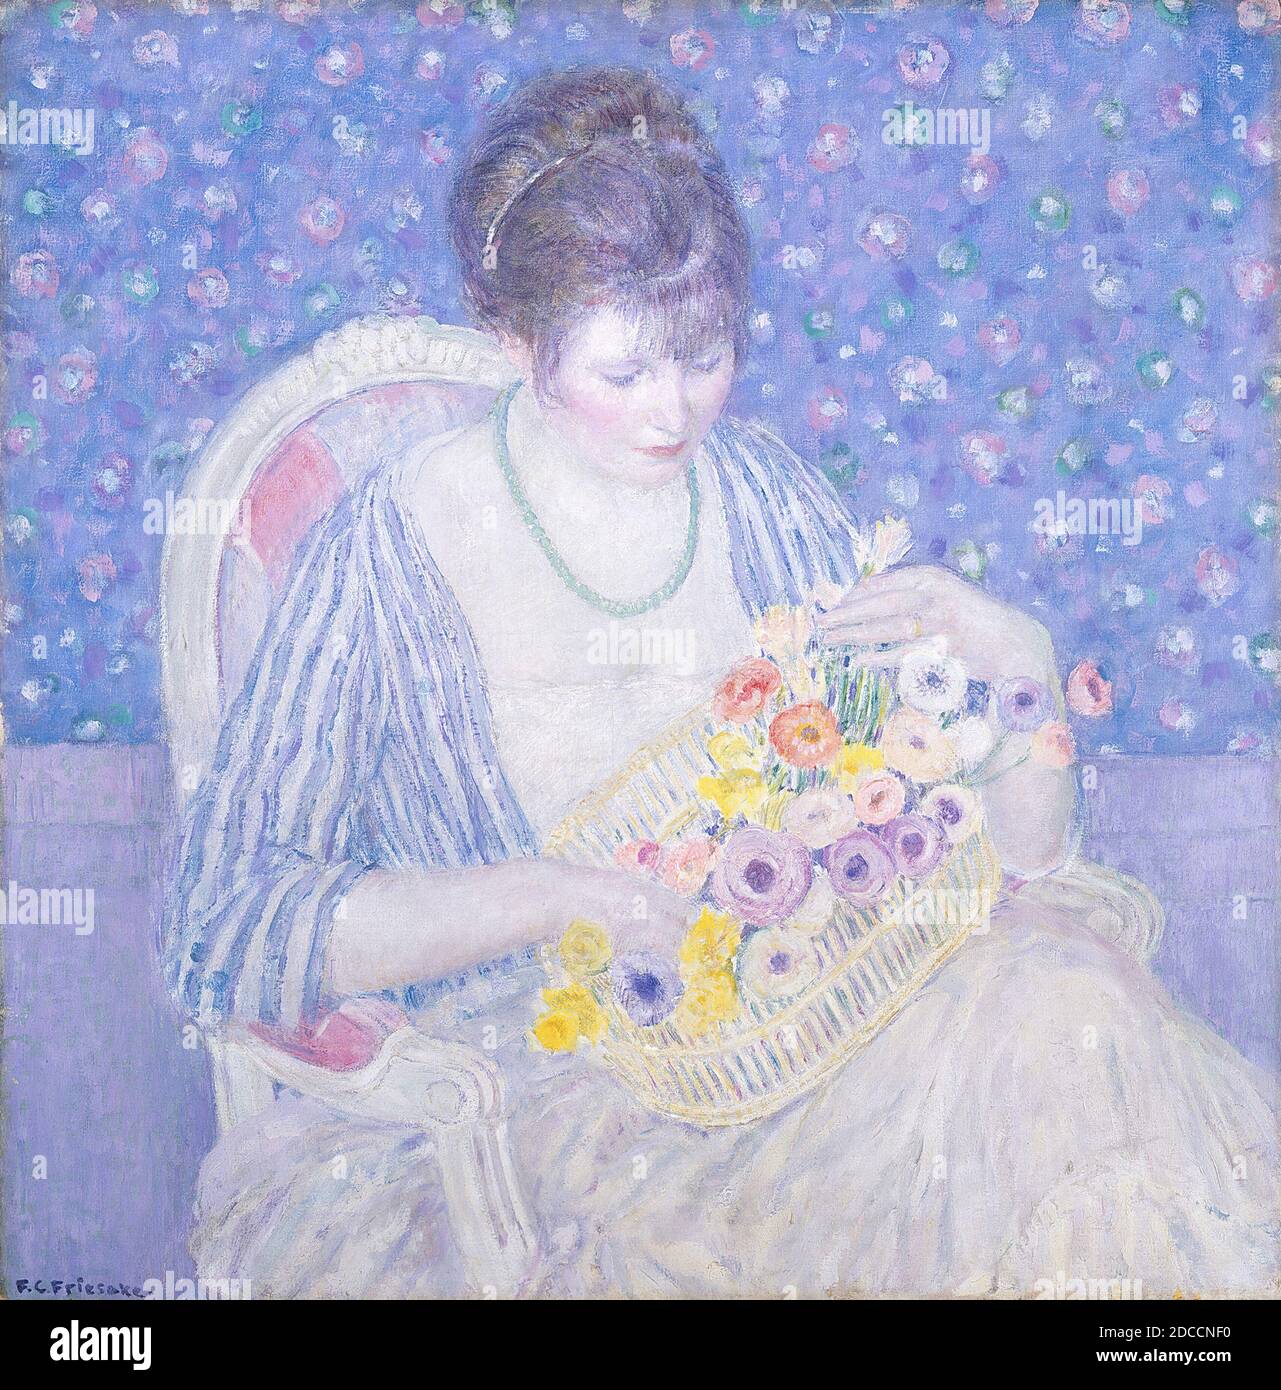 Frederick Carl Frieseke, (artiste), cuisine américaine, 1874 - 1939, The basket of Flowers, c. 1913/1917, huile sur toile, hors tout: 81.4 x 81.5 cm (32 1/16 x 32 1/16 in.), encadré: 93.8 x 94 x 6.7 cm (36 15/16 x 37 x 2 5/8 in Banque D'Images